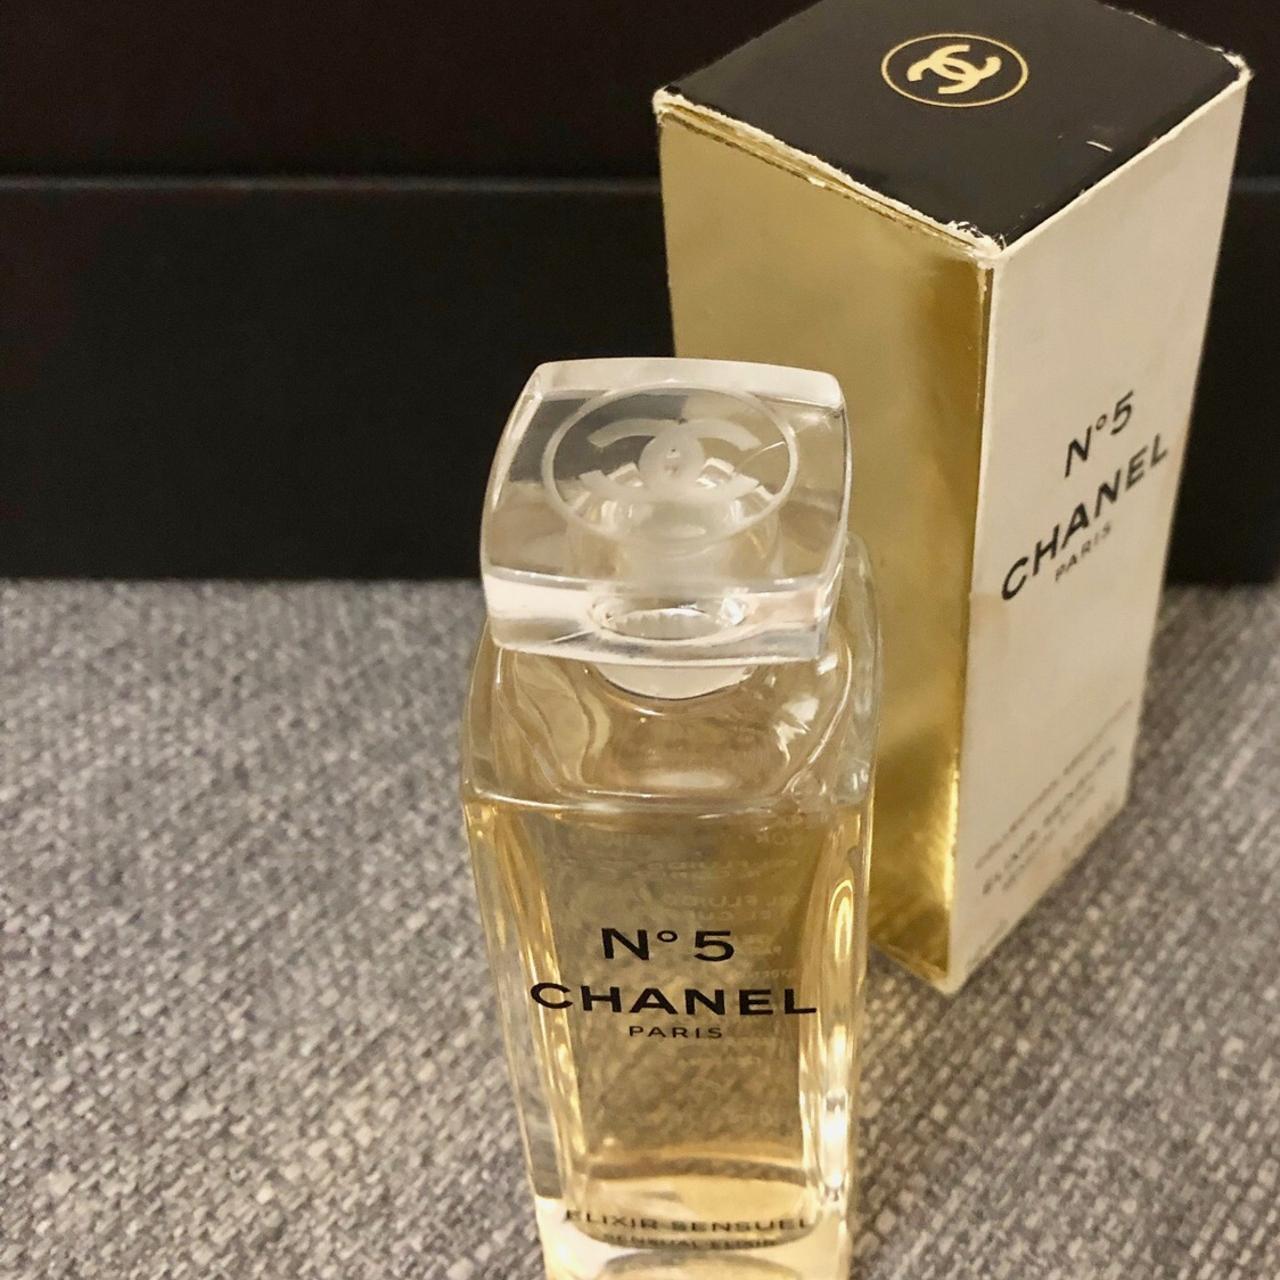 Chanel no 5 Paris Elixir Sensual Chanel number 5 - Depop